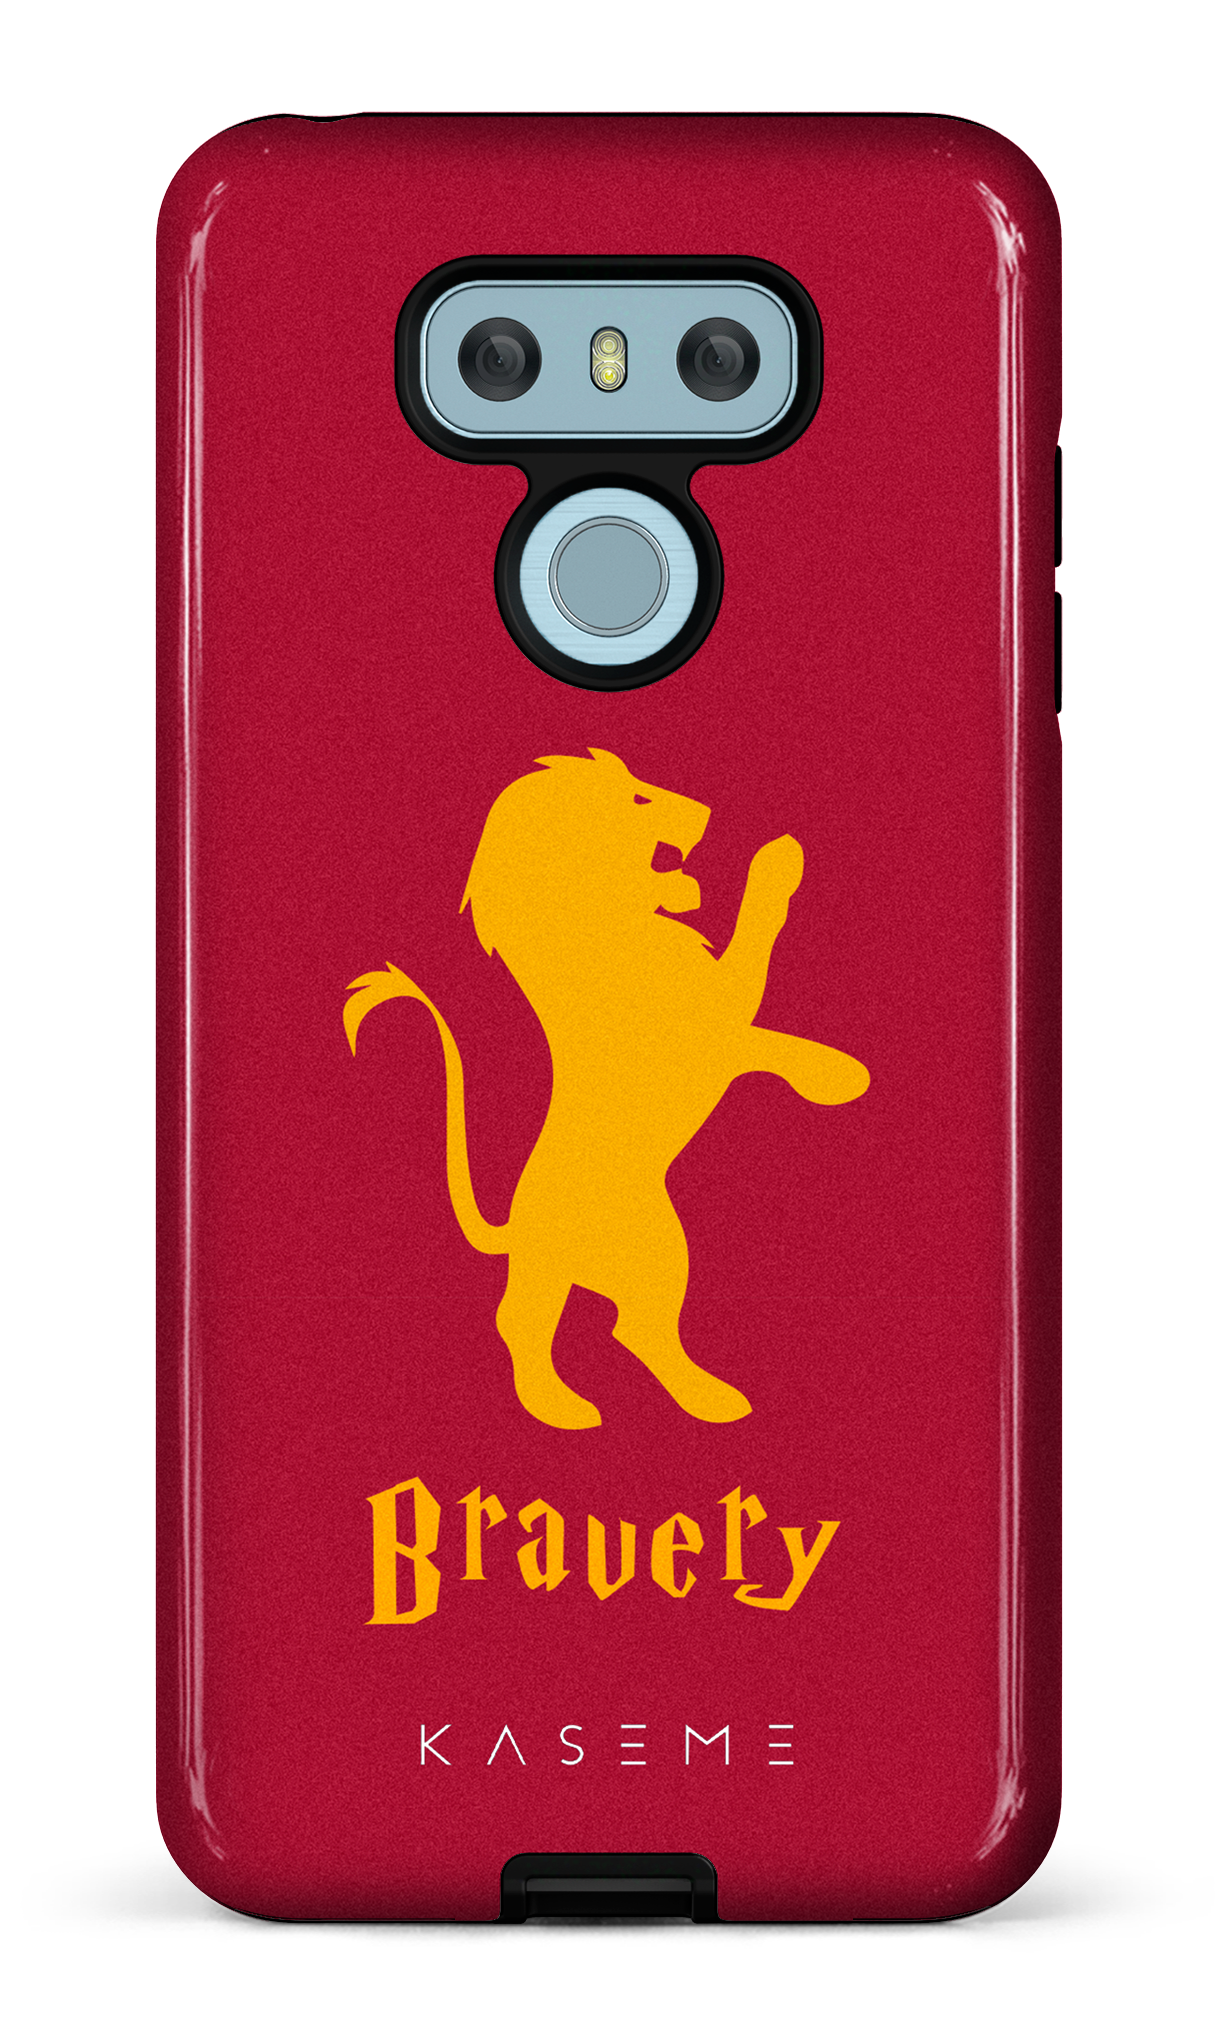 Bravery - LG G6